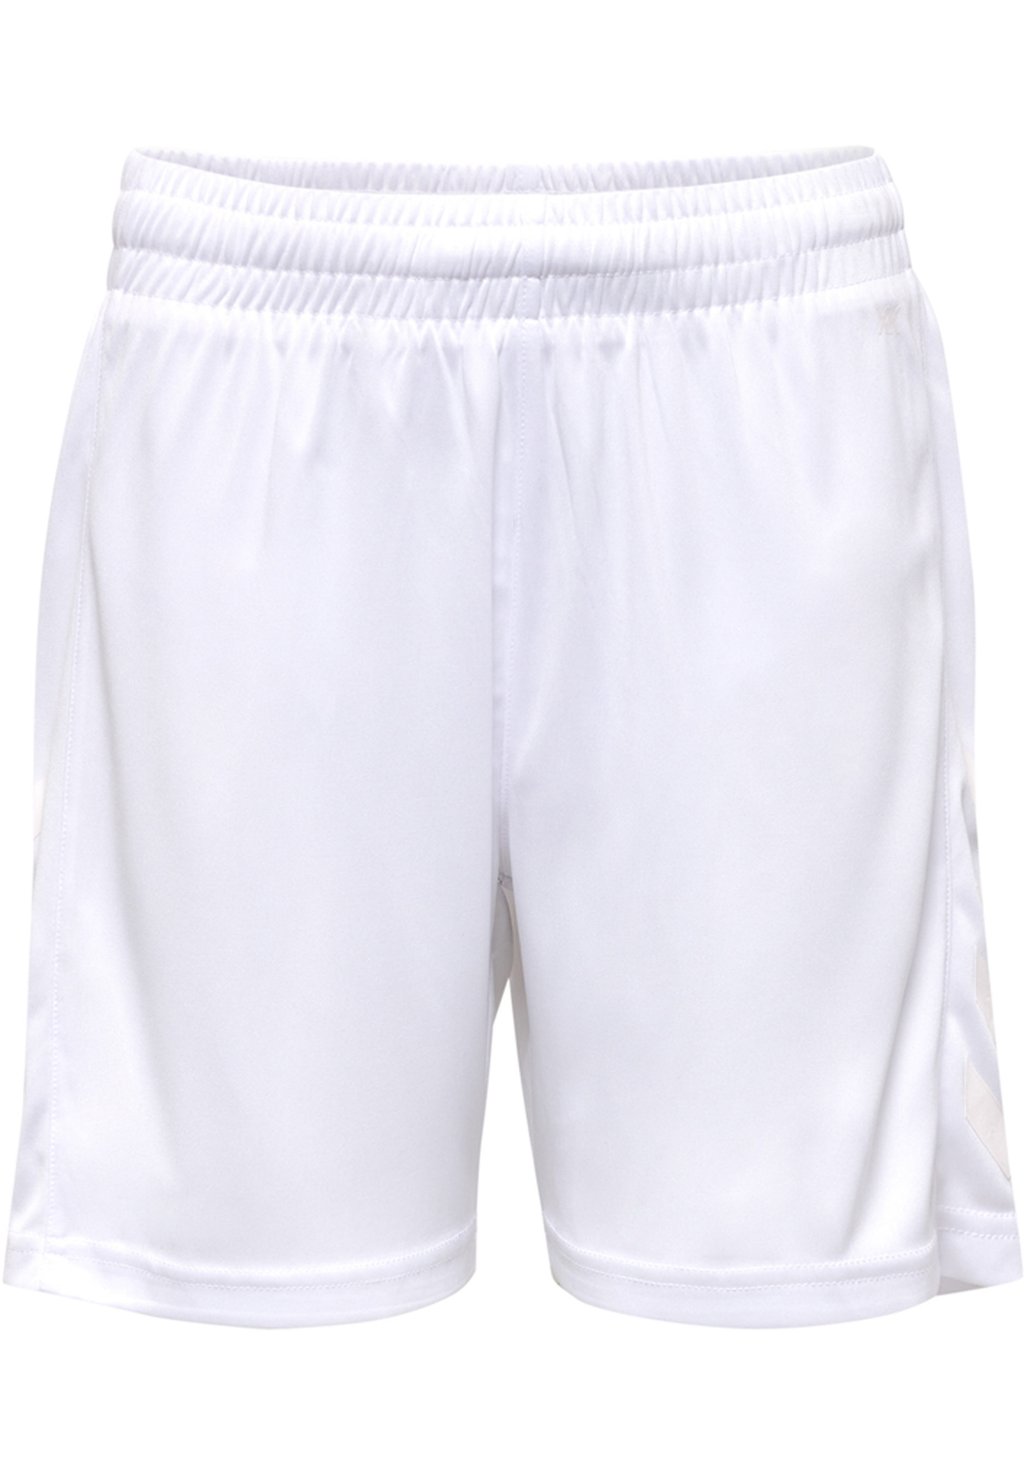 Шорты спортивные CORE XK POLY Hummel, цвет white white спортивные шорты core xk poly hummel цвет acai